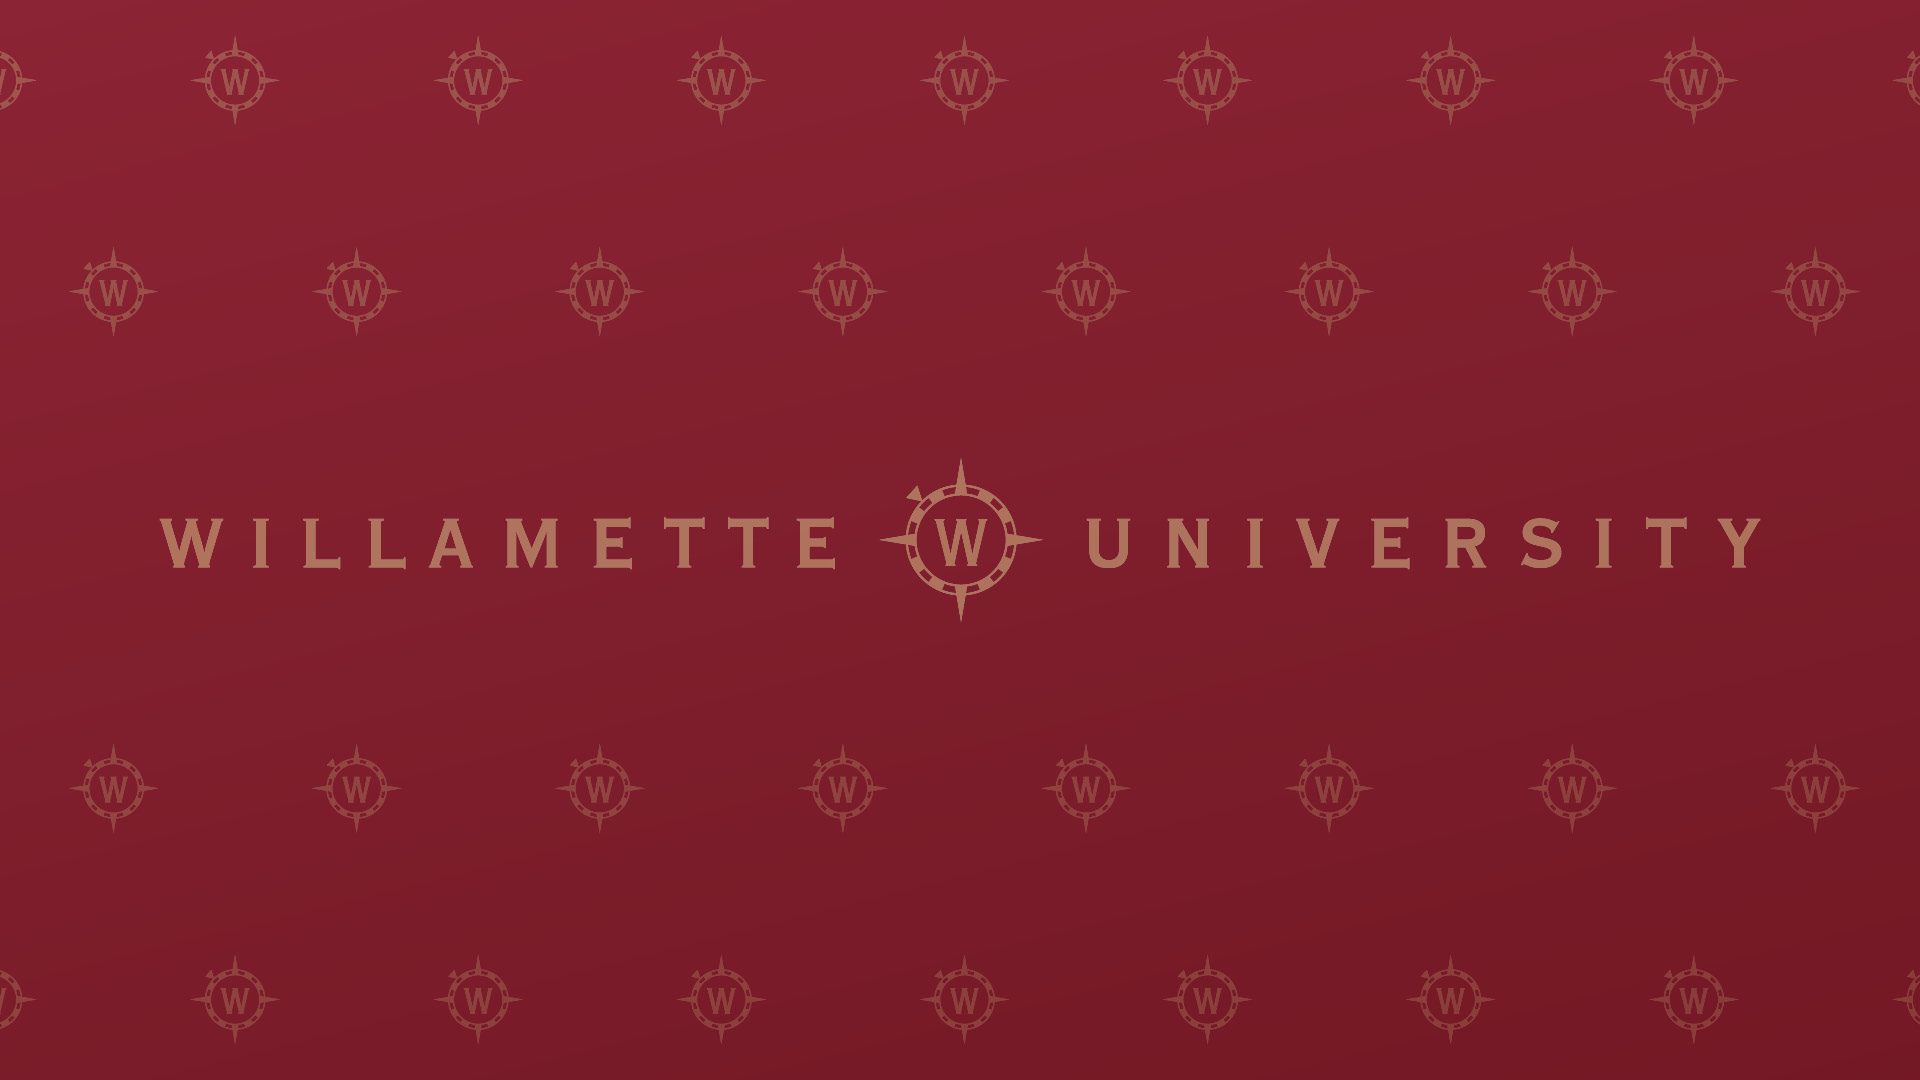 Cardinal background, mini gold Willamette compasses like polka dots, Text "Willamette University"